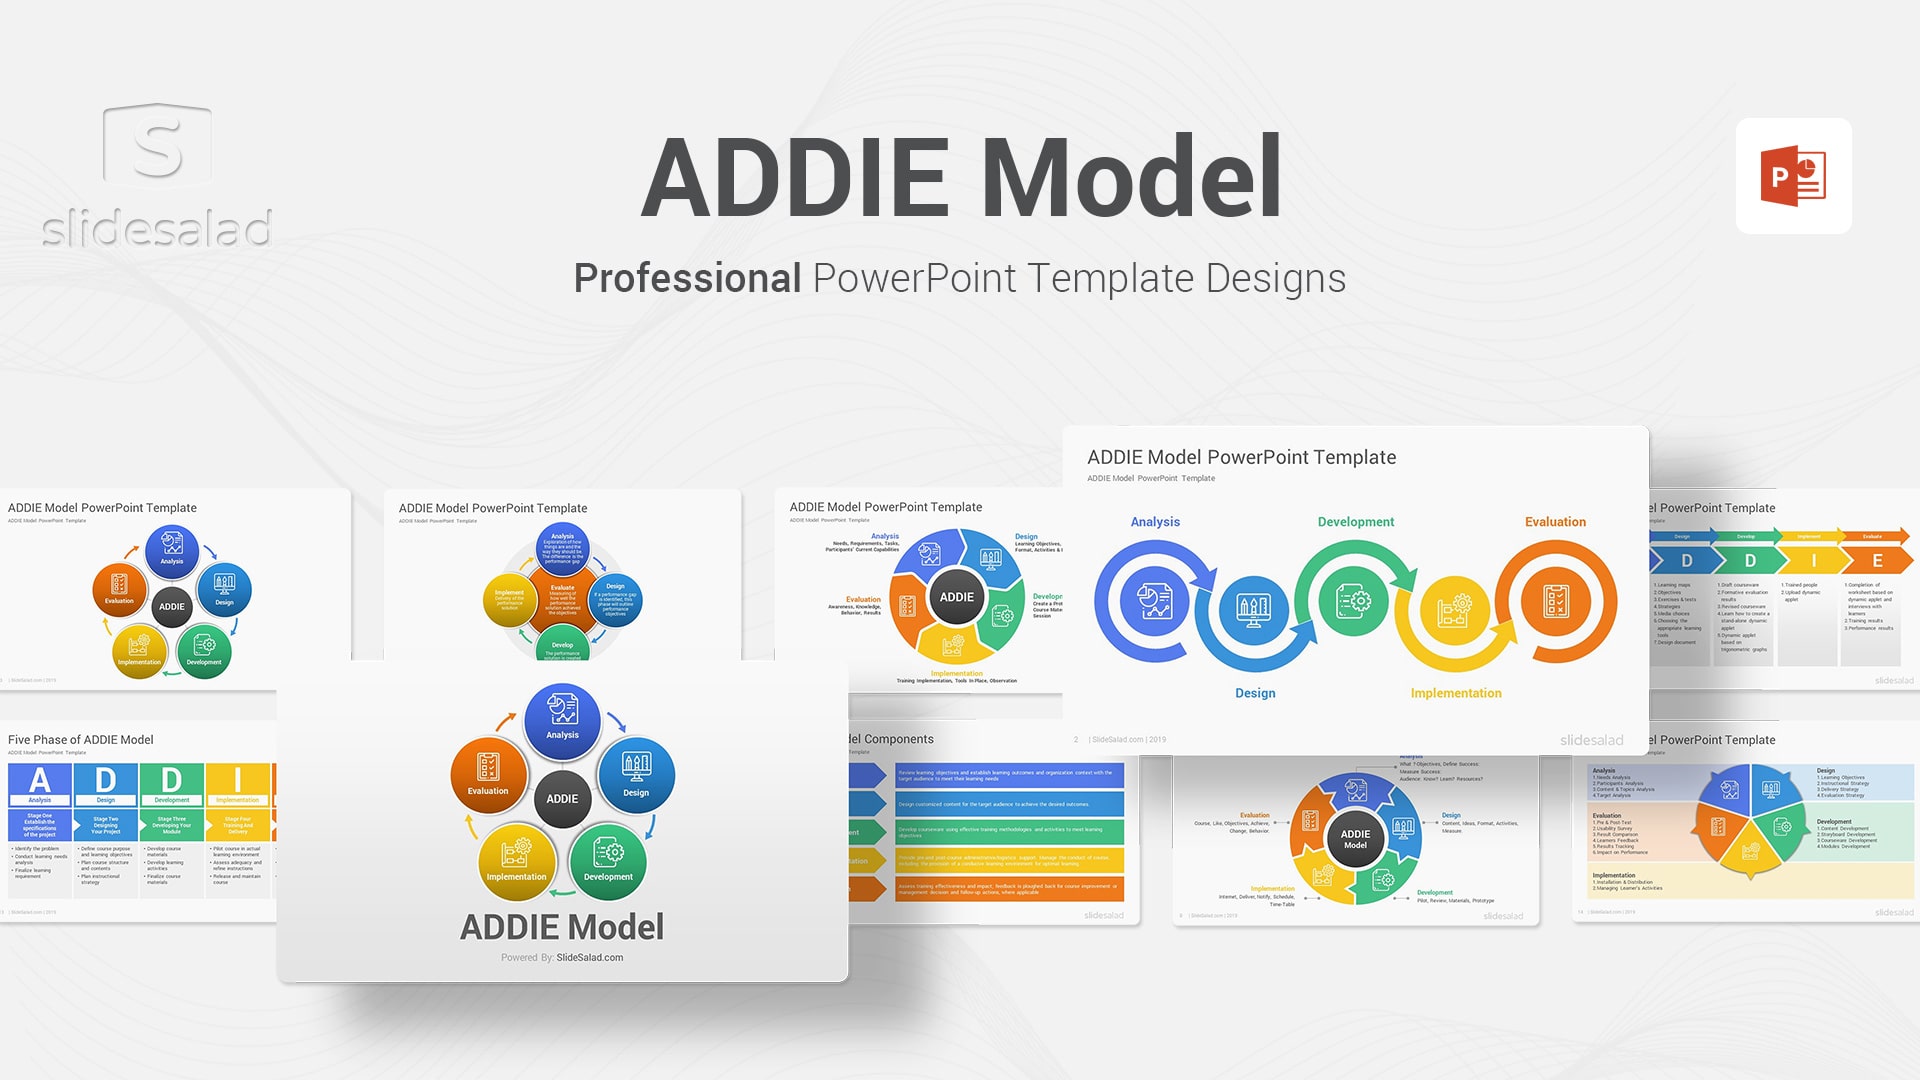 ADDIE Model PowerPoint Template Diagrams